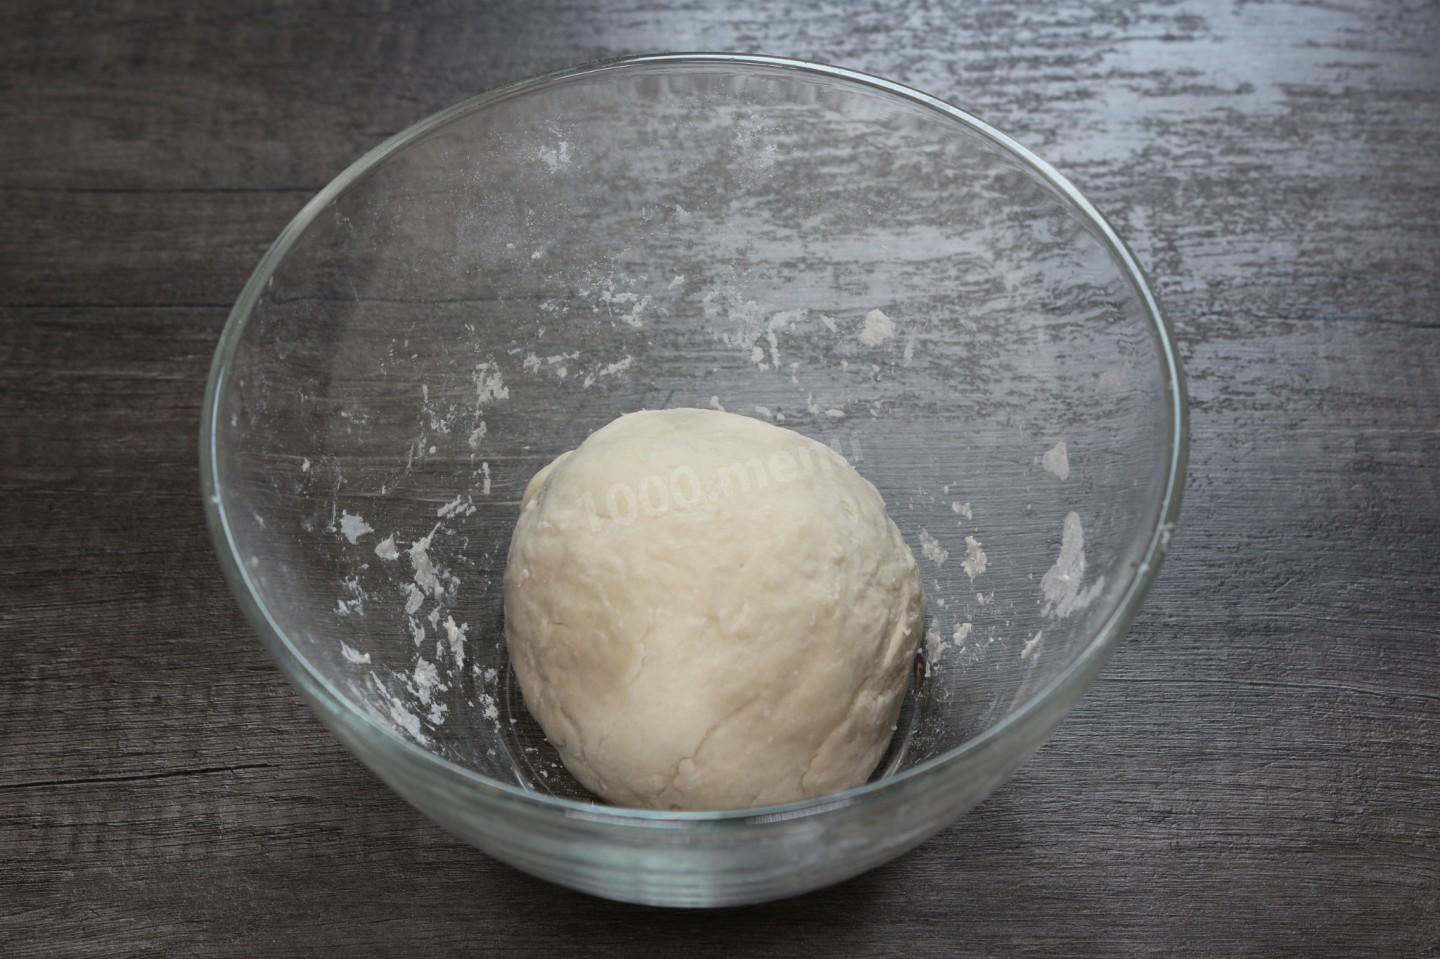 пельменное тесто рецепт на кипятке и раст масле с фото пошагово фото 47